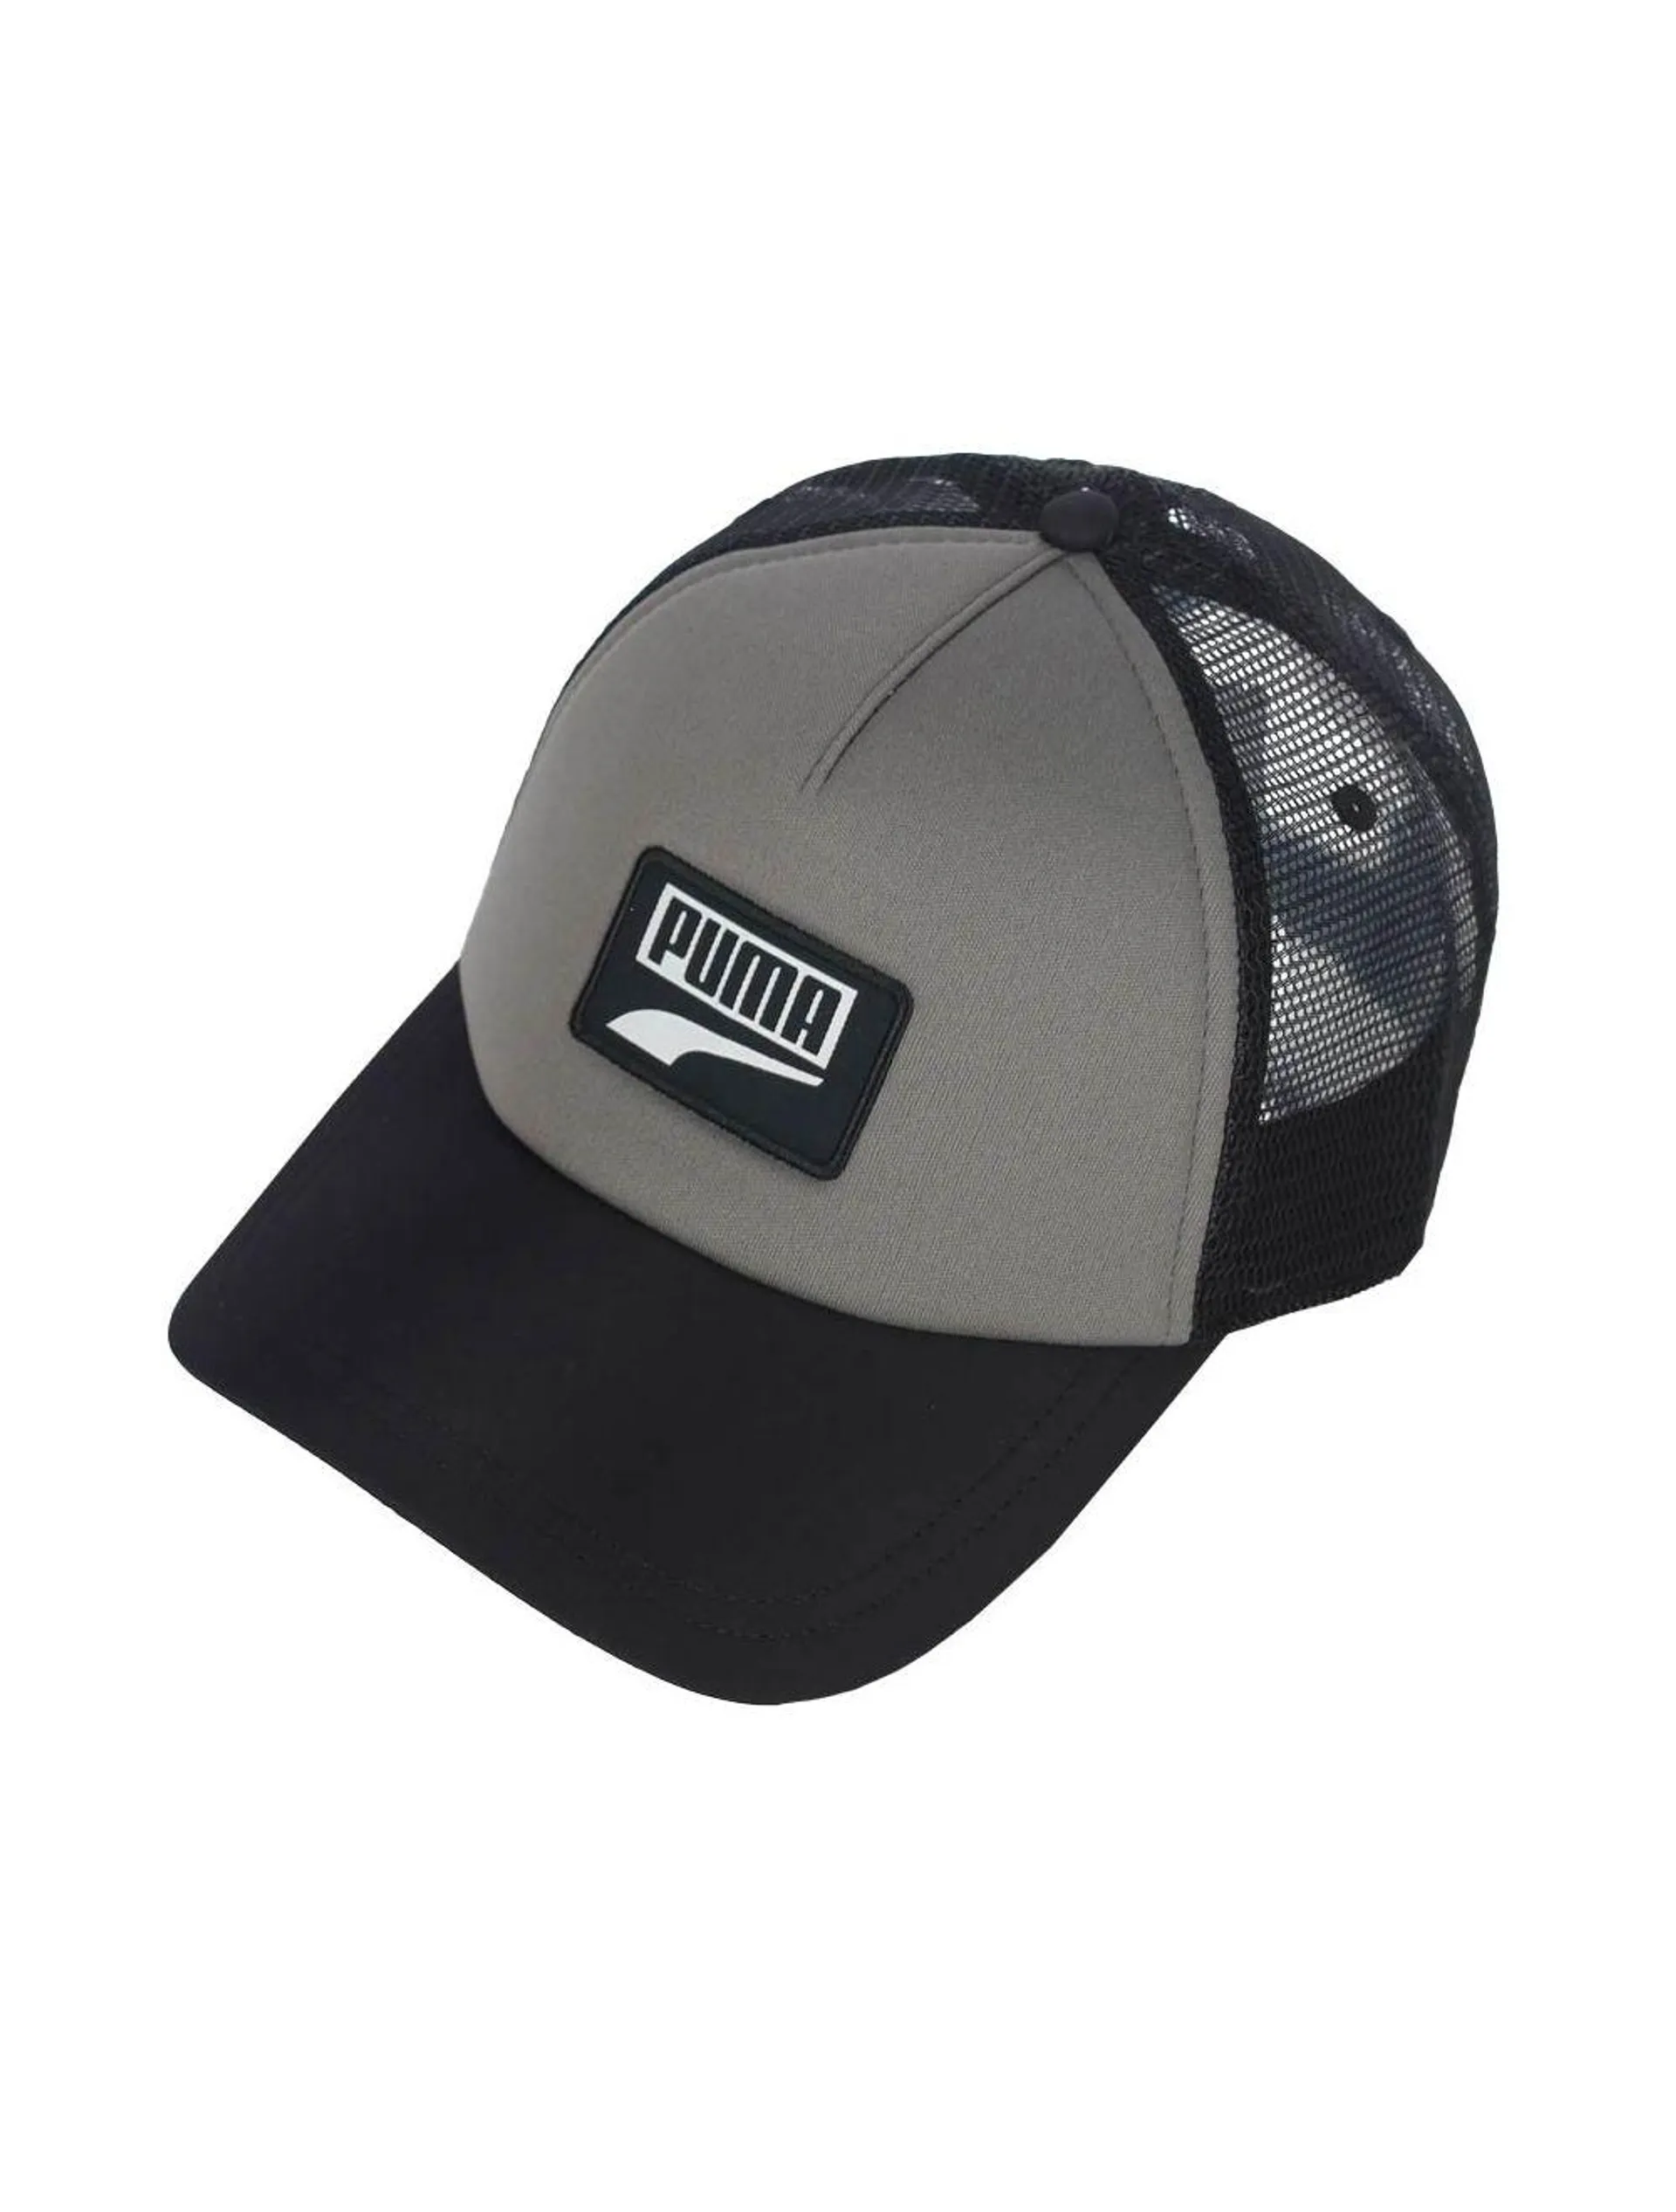 Puma Logo Trucker Hat Black